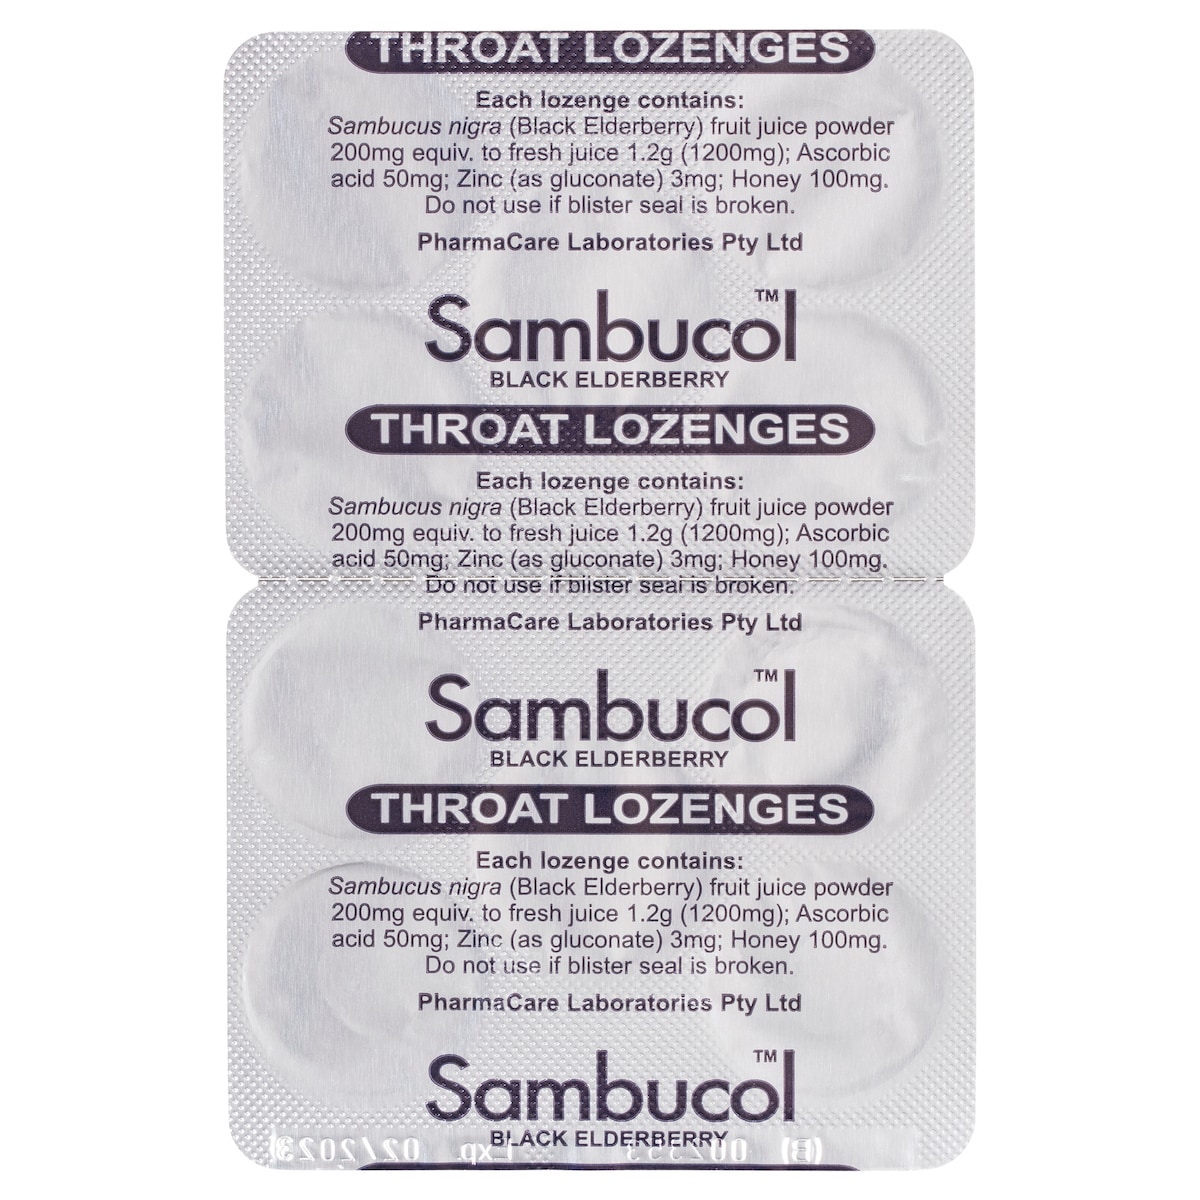 Sambucol Immune Defence Lozenges 20 Pack